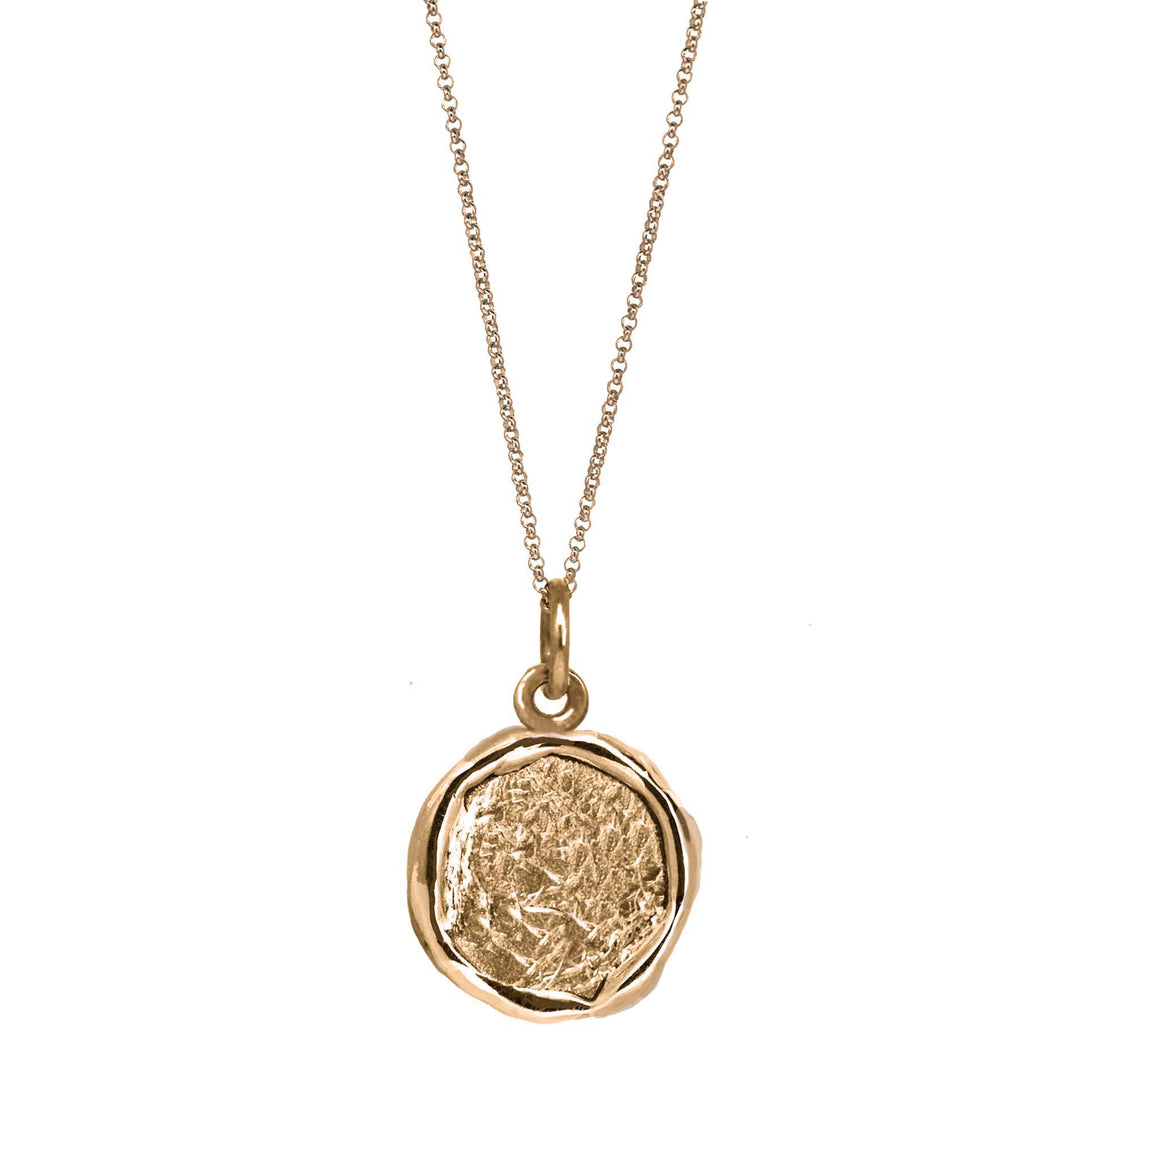 Medallion necklace in rose gold